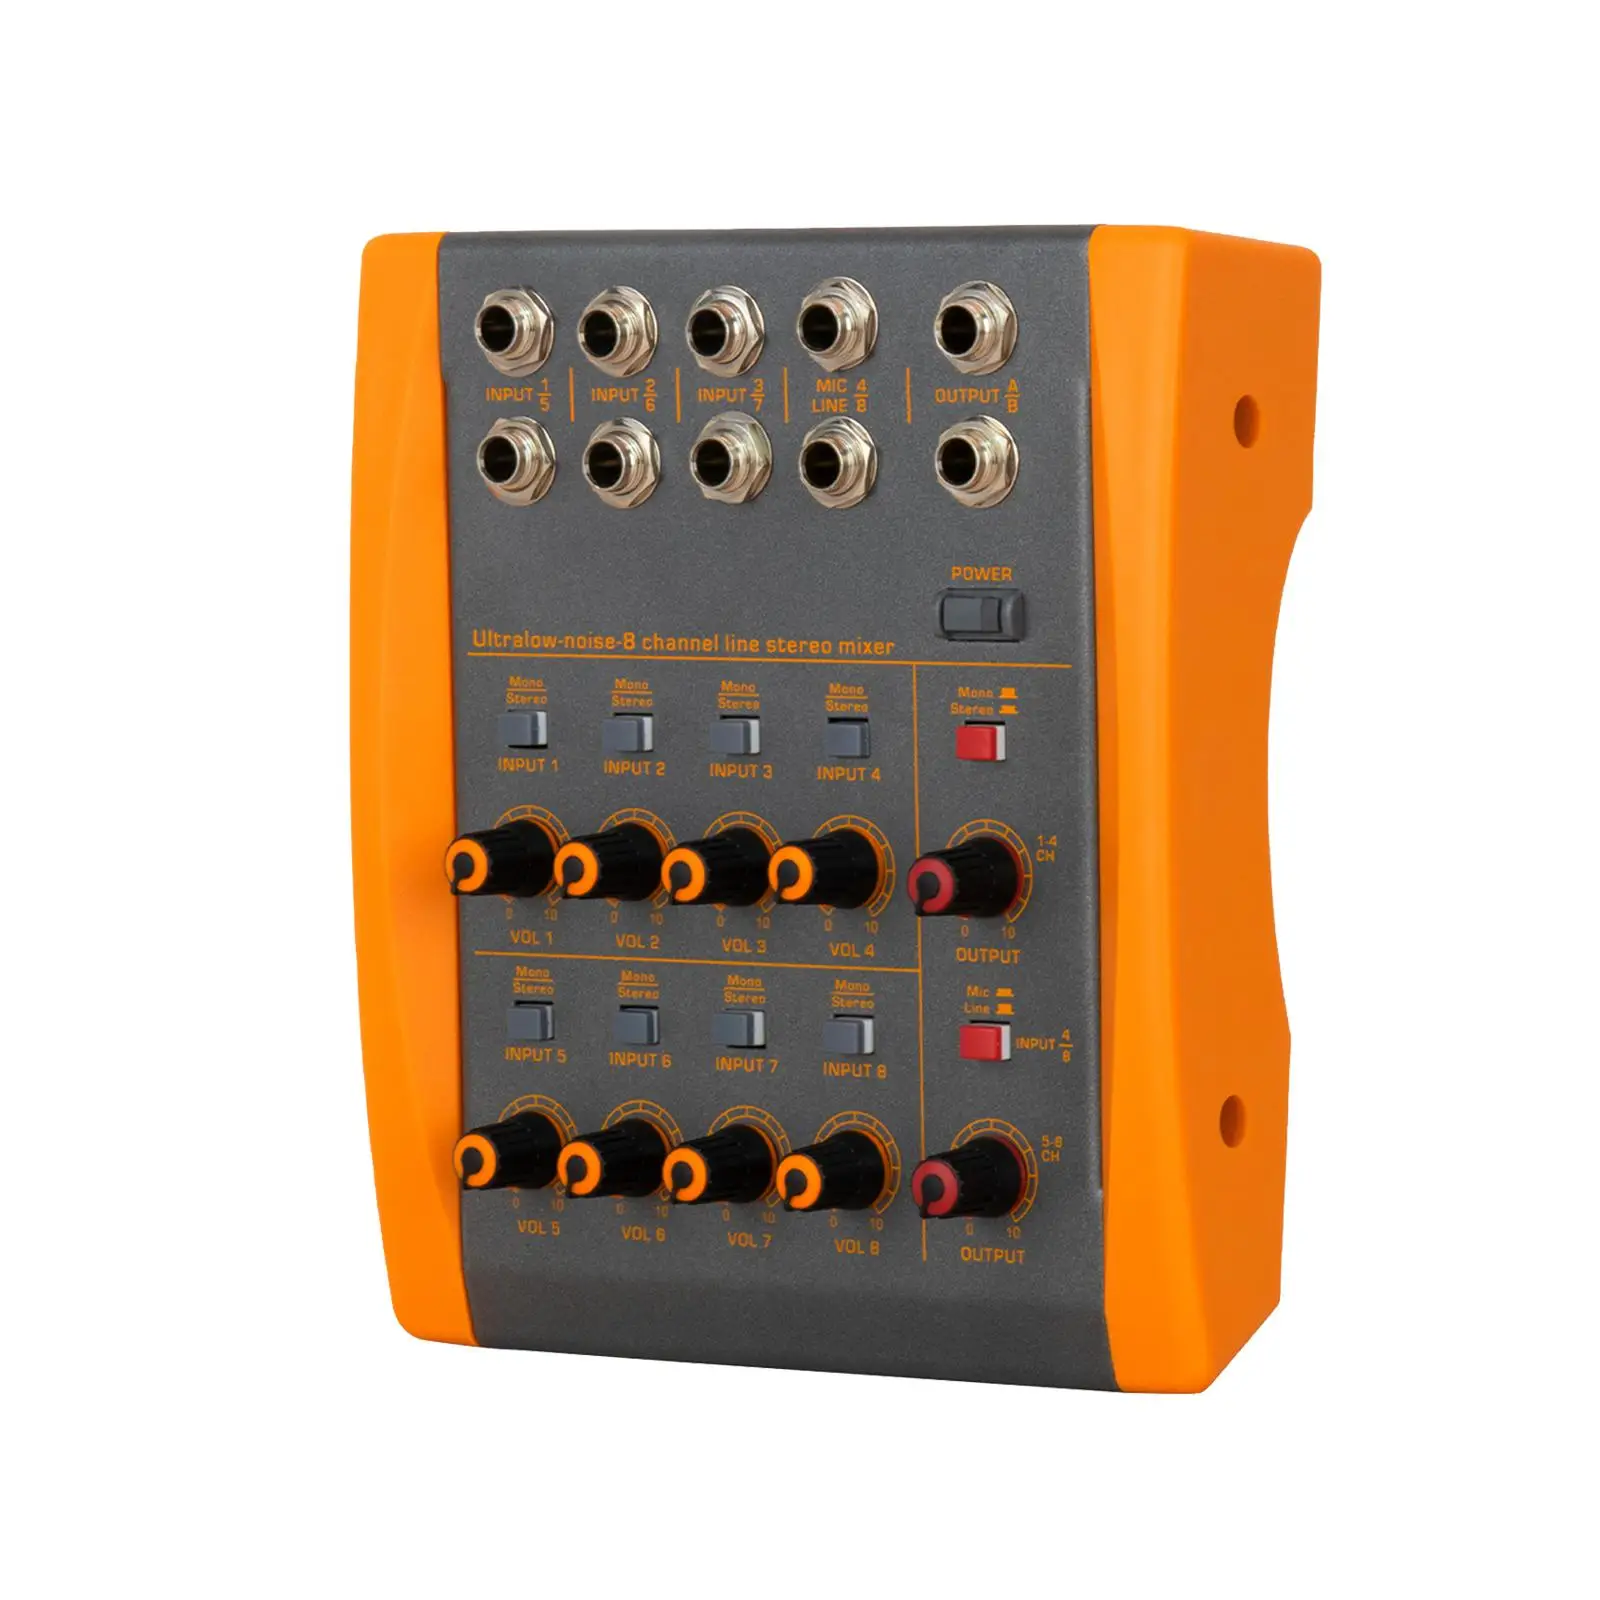 Mini Audio Mixer DC 5V 6.35mm Interface Compact Mixer Professional 8 Stereo Ultra for Bars Small Clubs Studio Recording Guitars